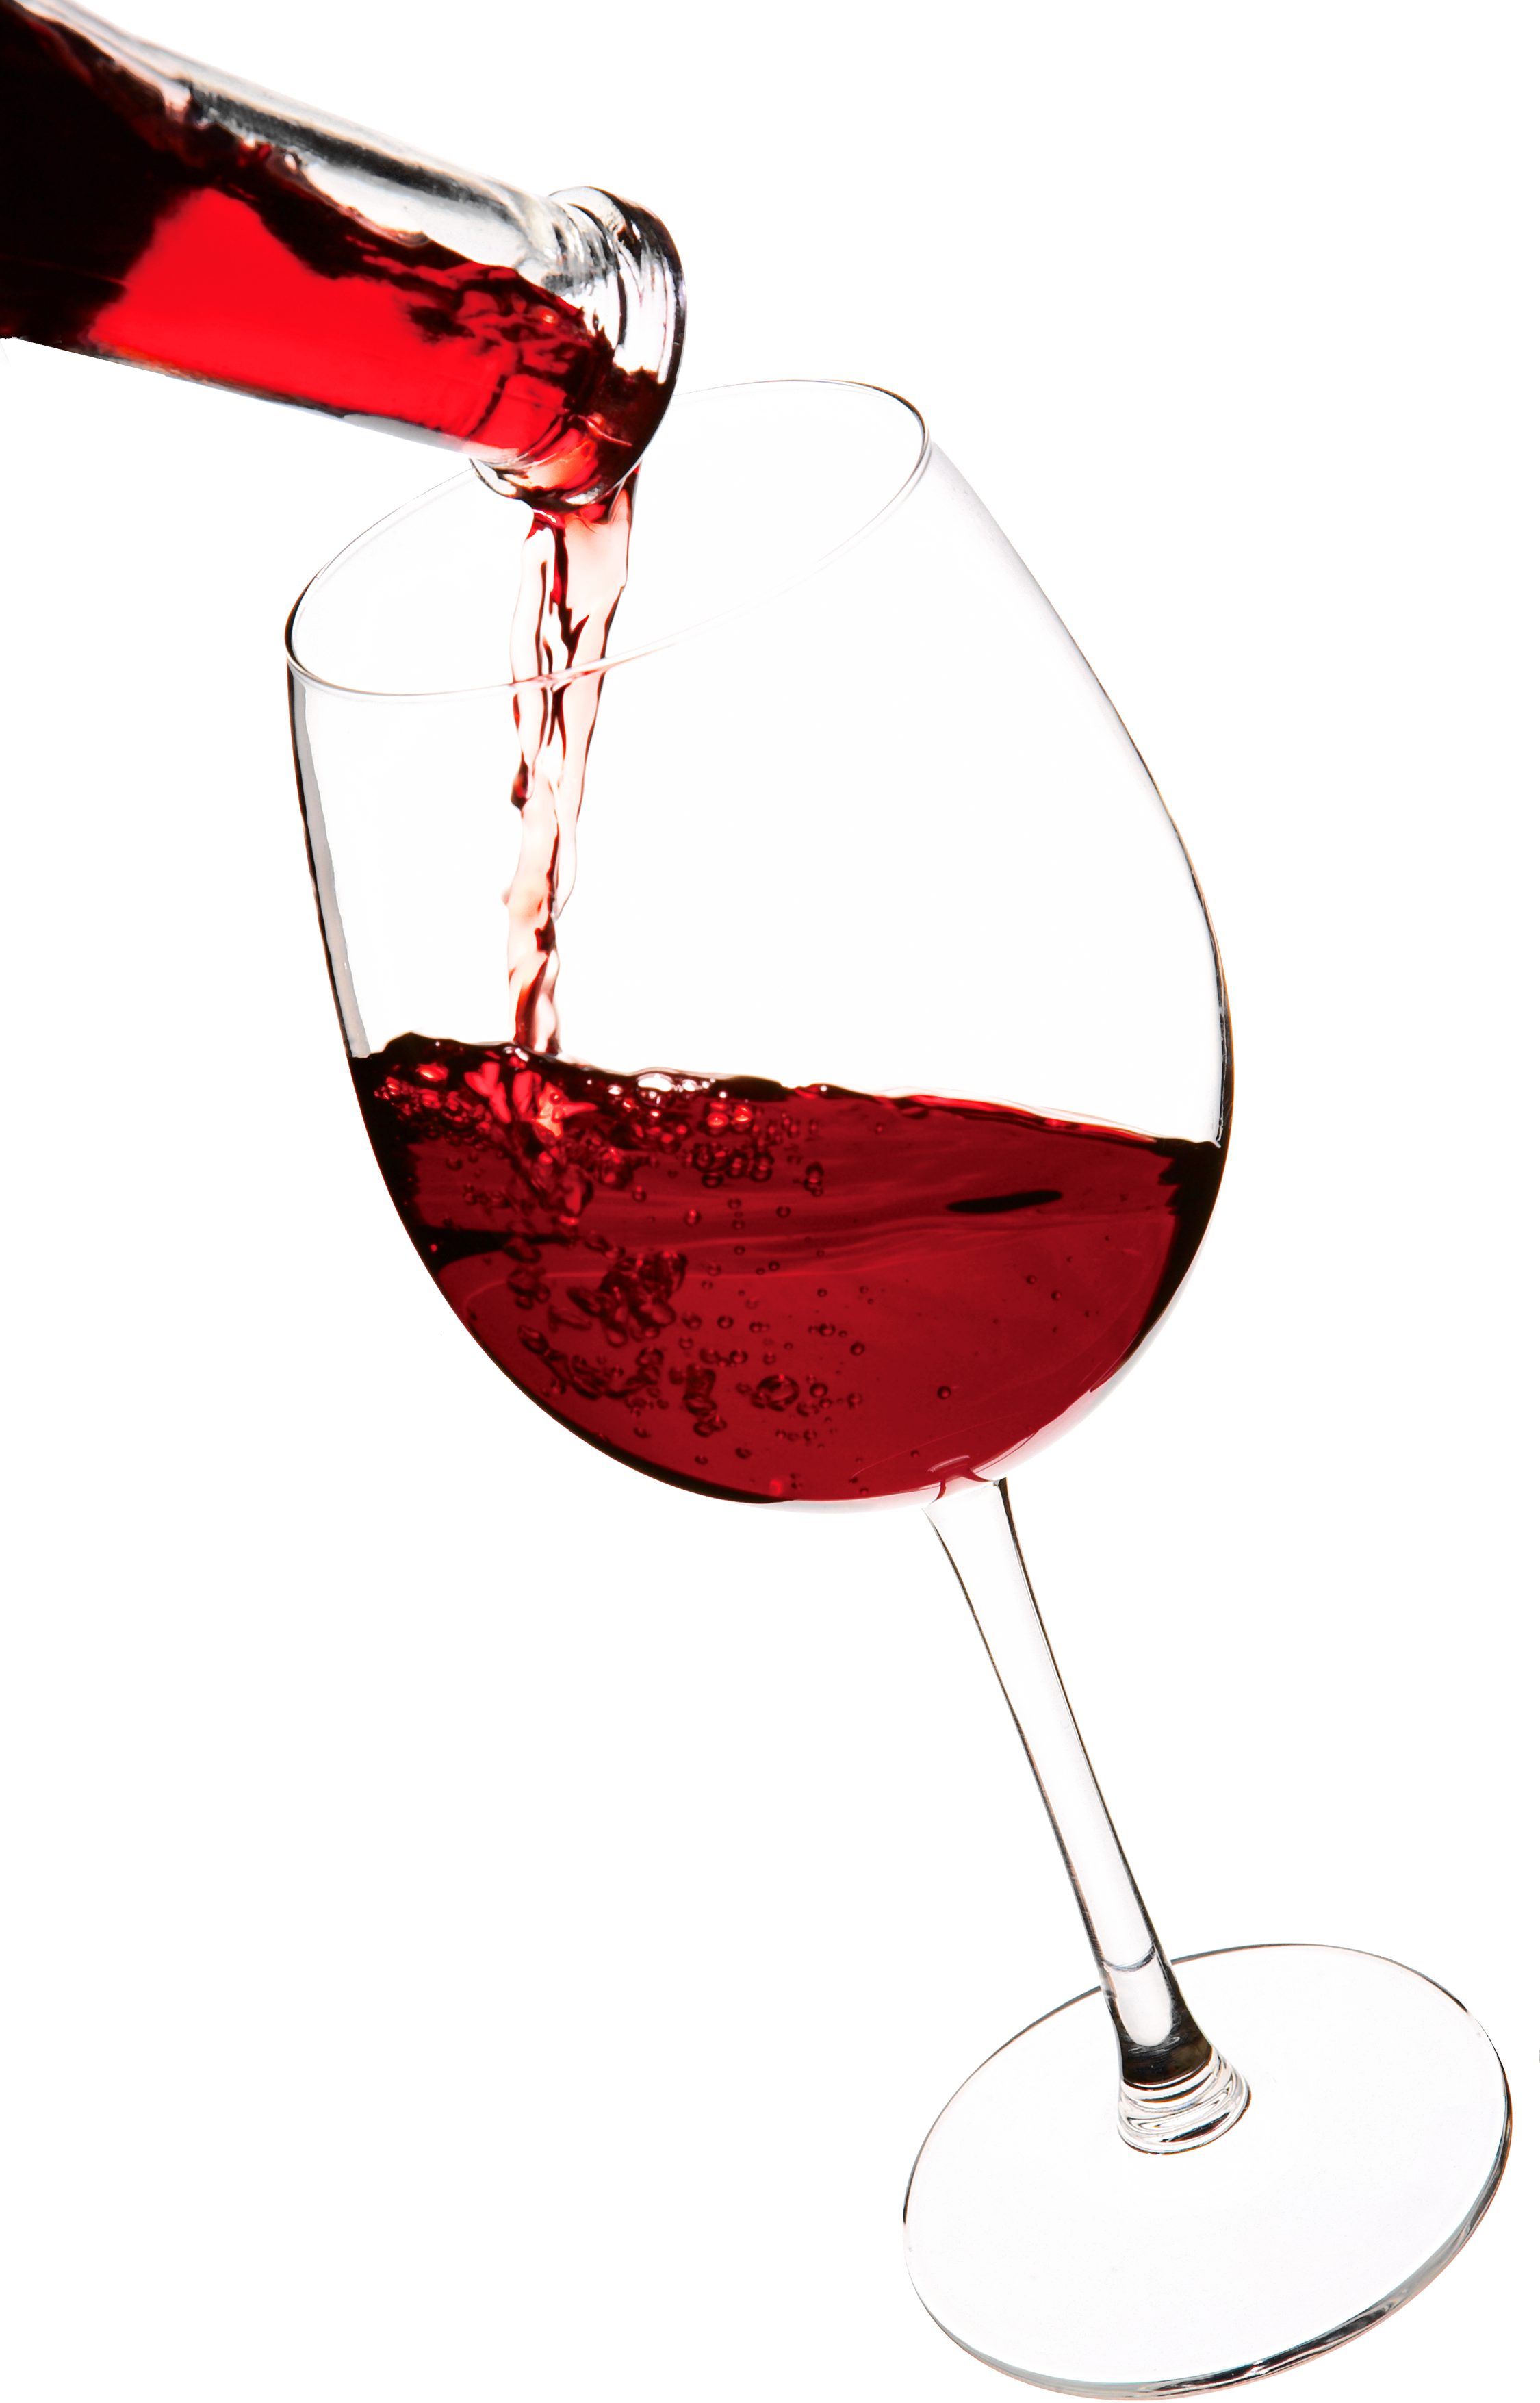 Gelas anggur